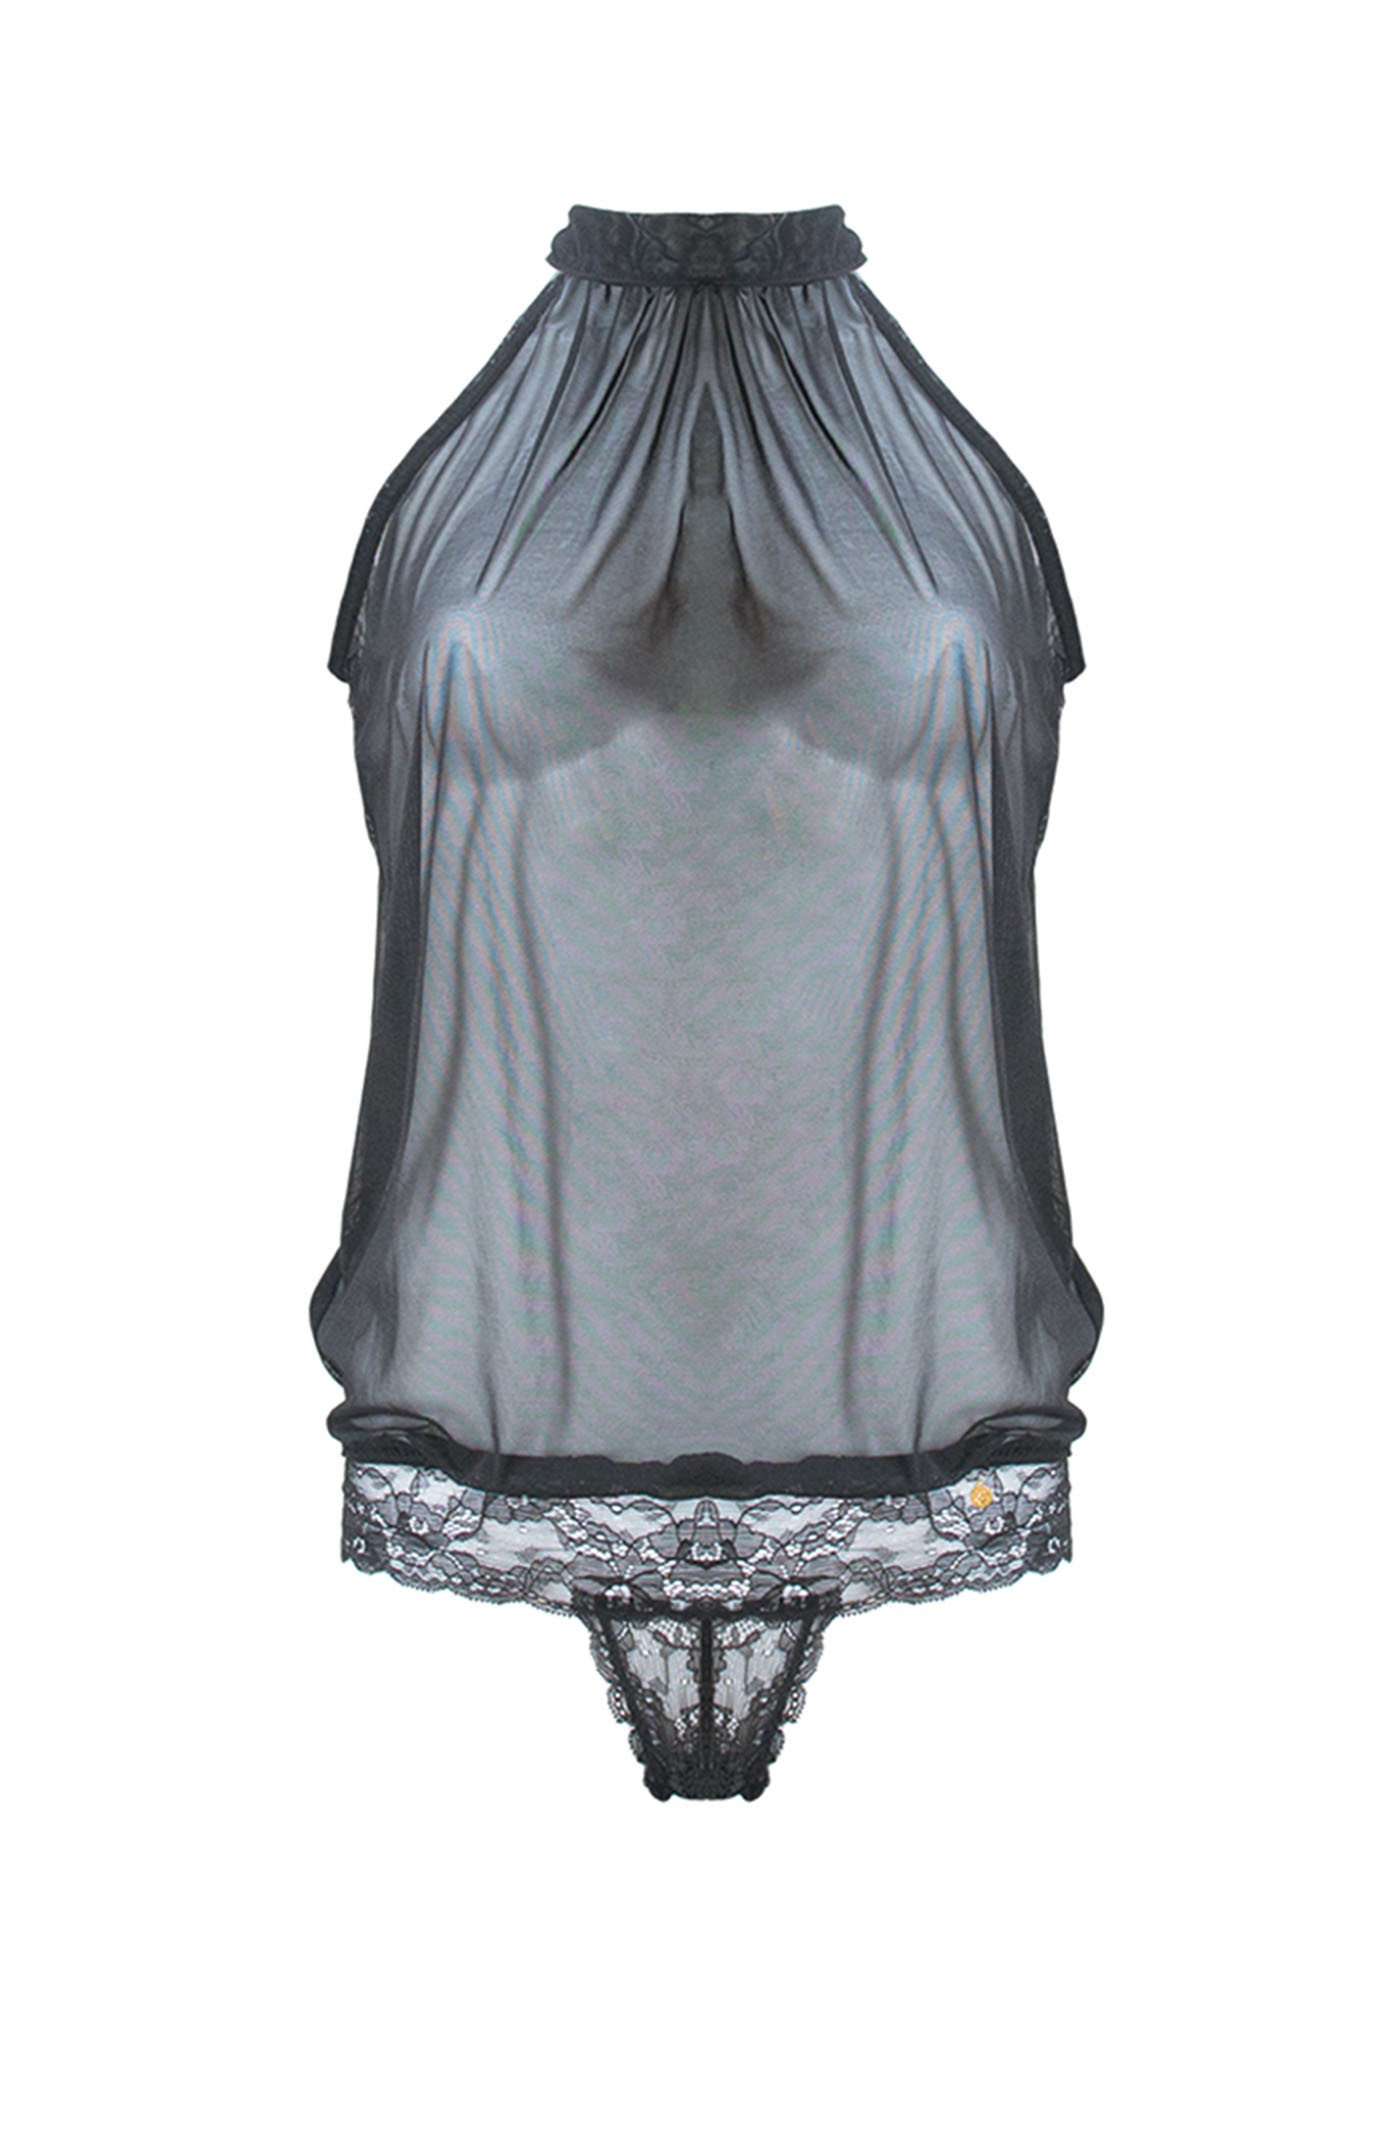 https://www.softparis.com/13255/emma-emsemble-top-skirt.jpg